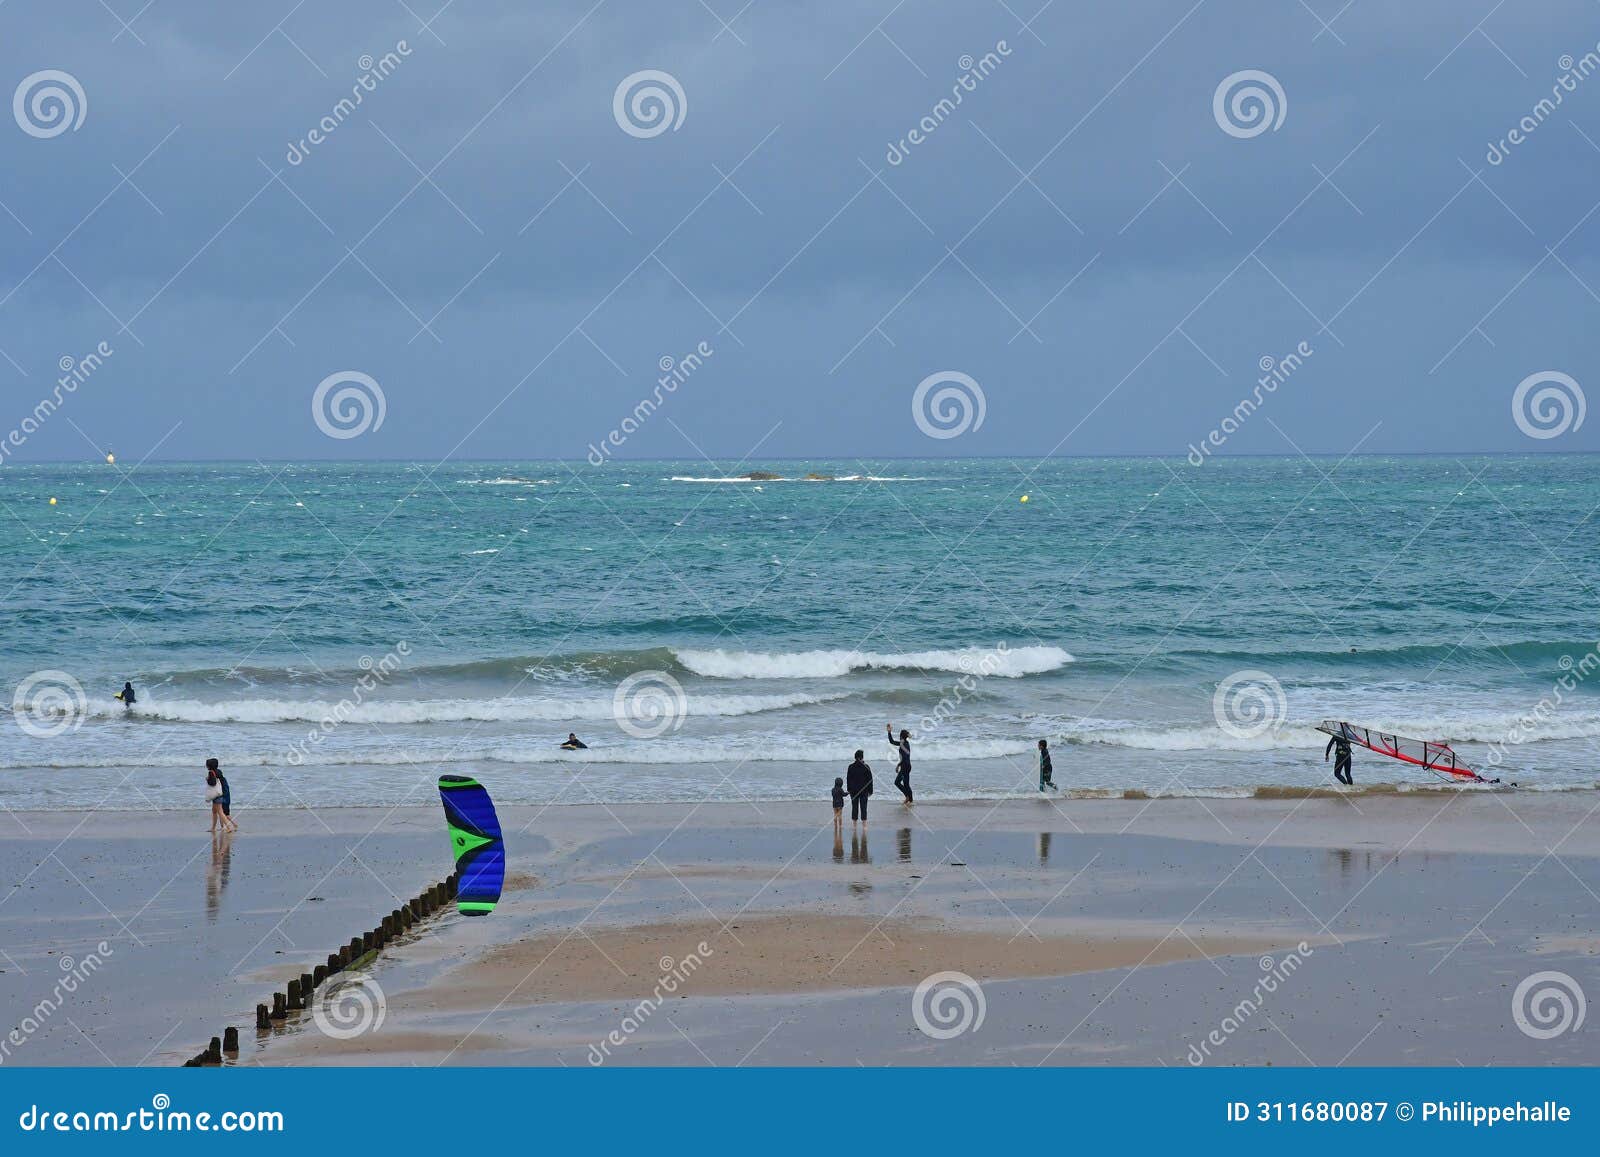 saint malo france - july 30 2023 : sillon beach